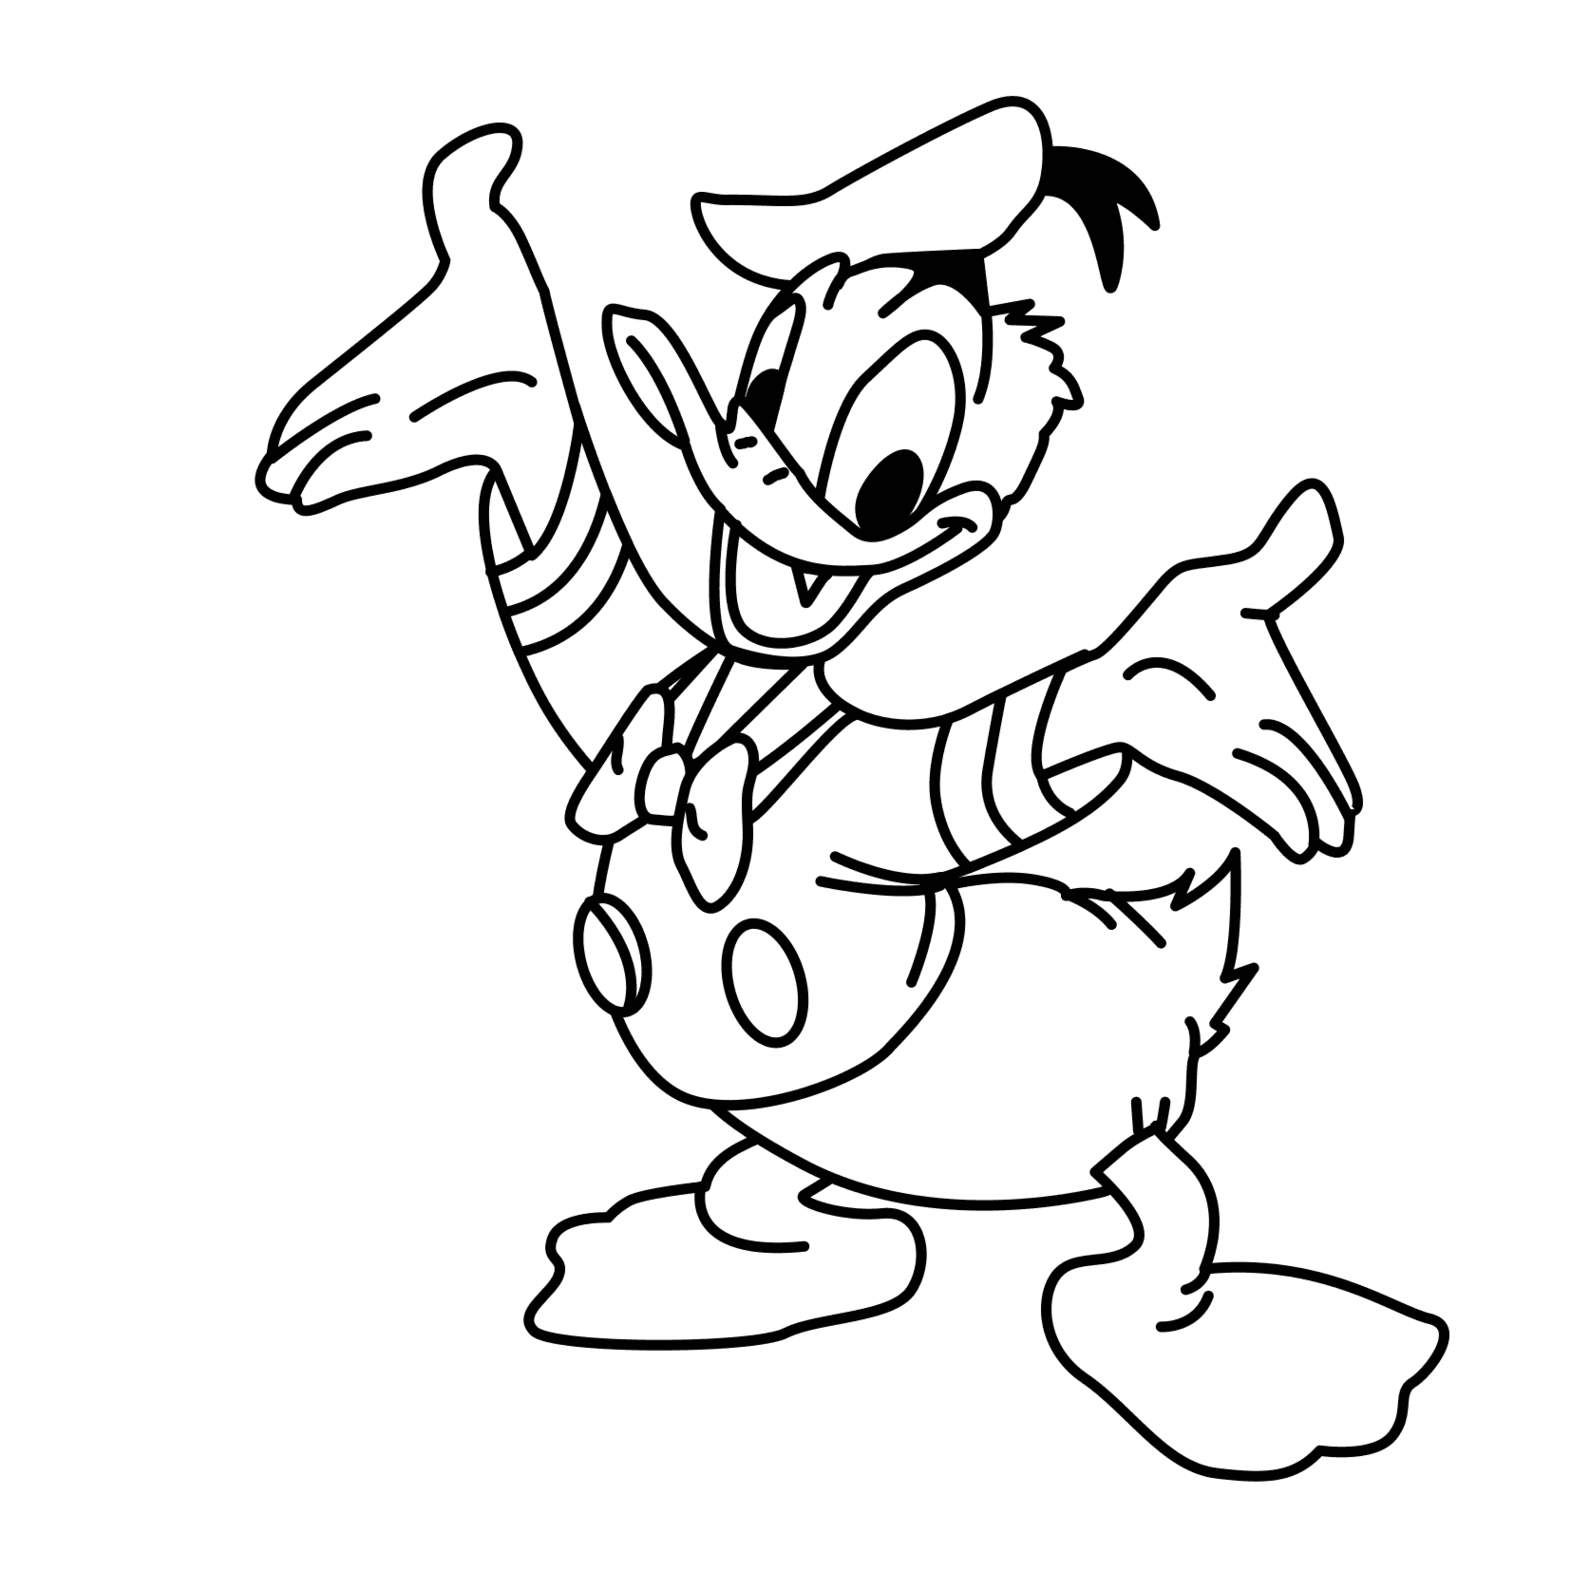 DONALD DUCK Signed FRANCESCO BARBIERI Hand Drawn Character Art Sketch  8.5" x 6" | eBay